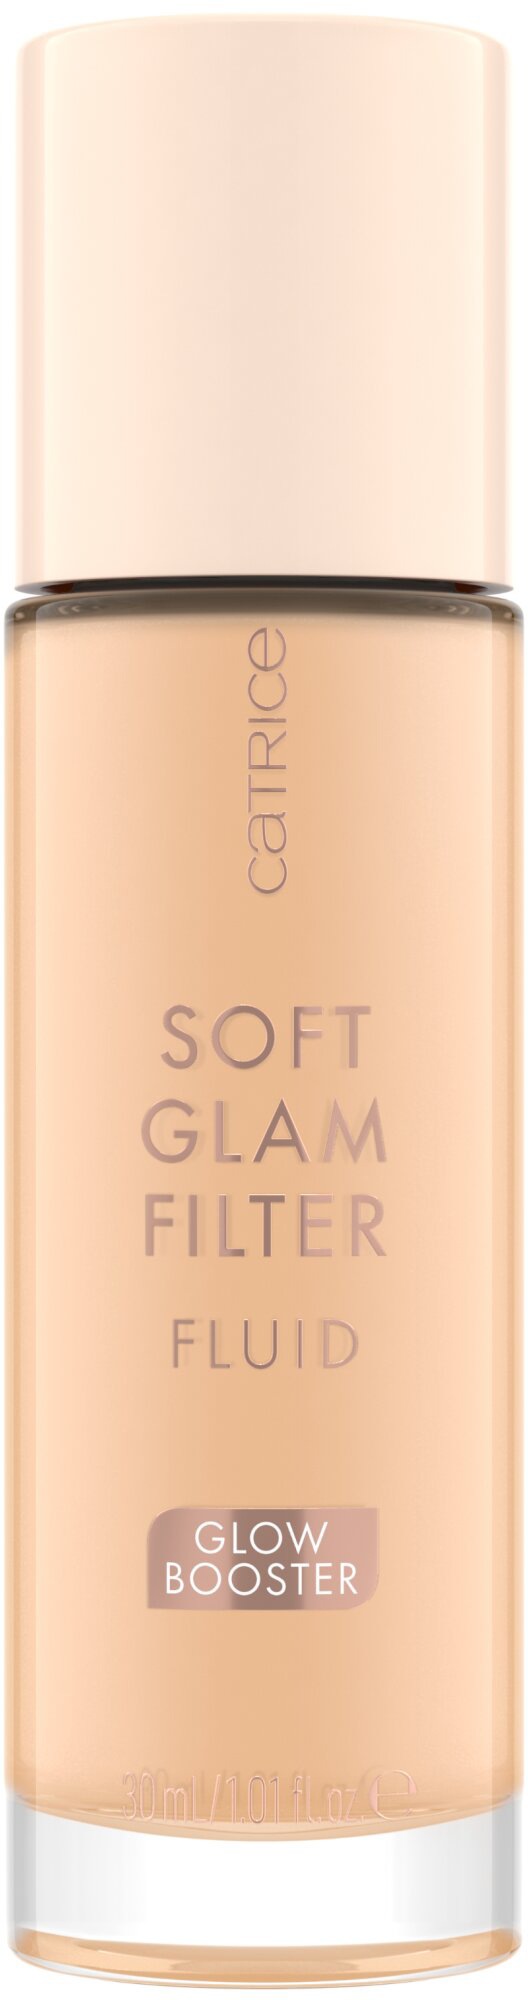 bei Filter Catrice Fluid«, UNIVERSAL (Set) Glam »Soft online Primer